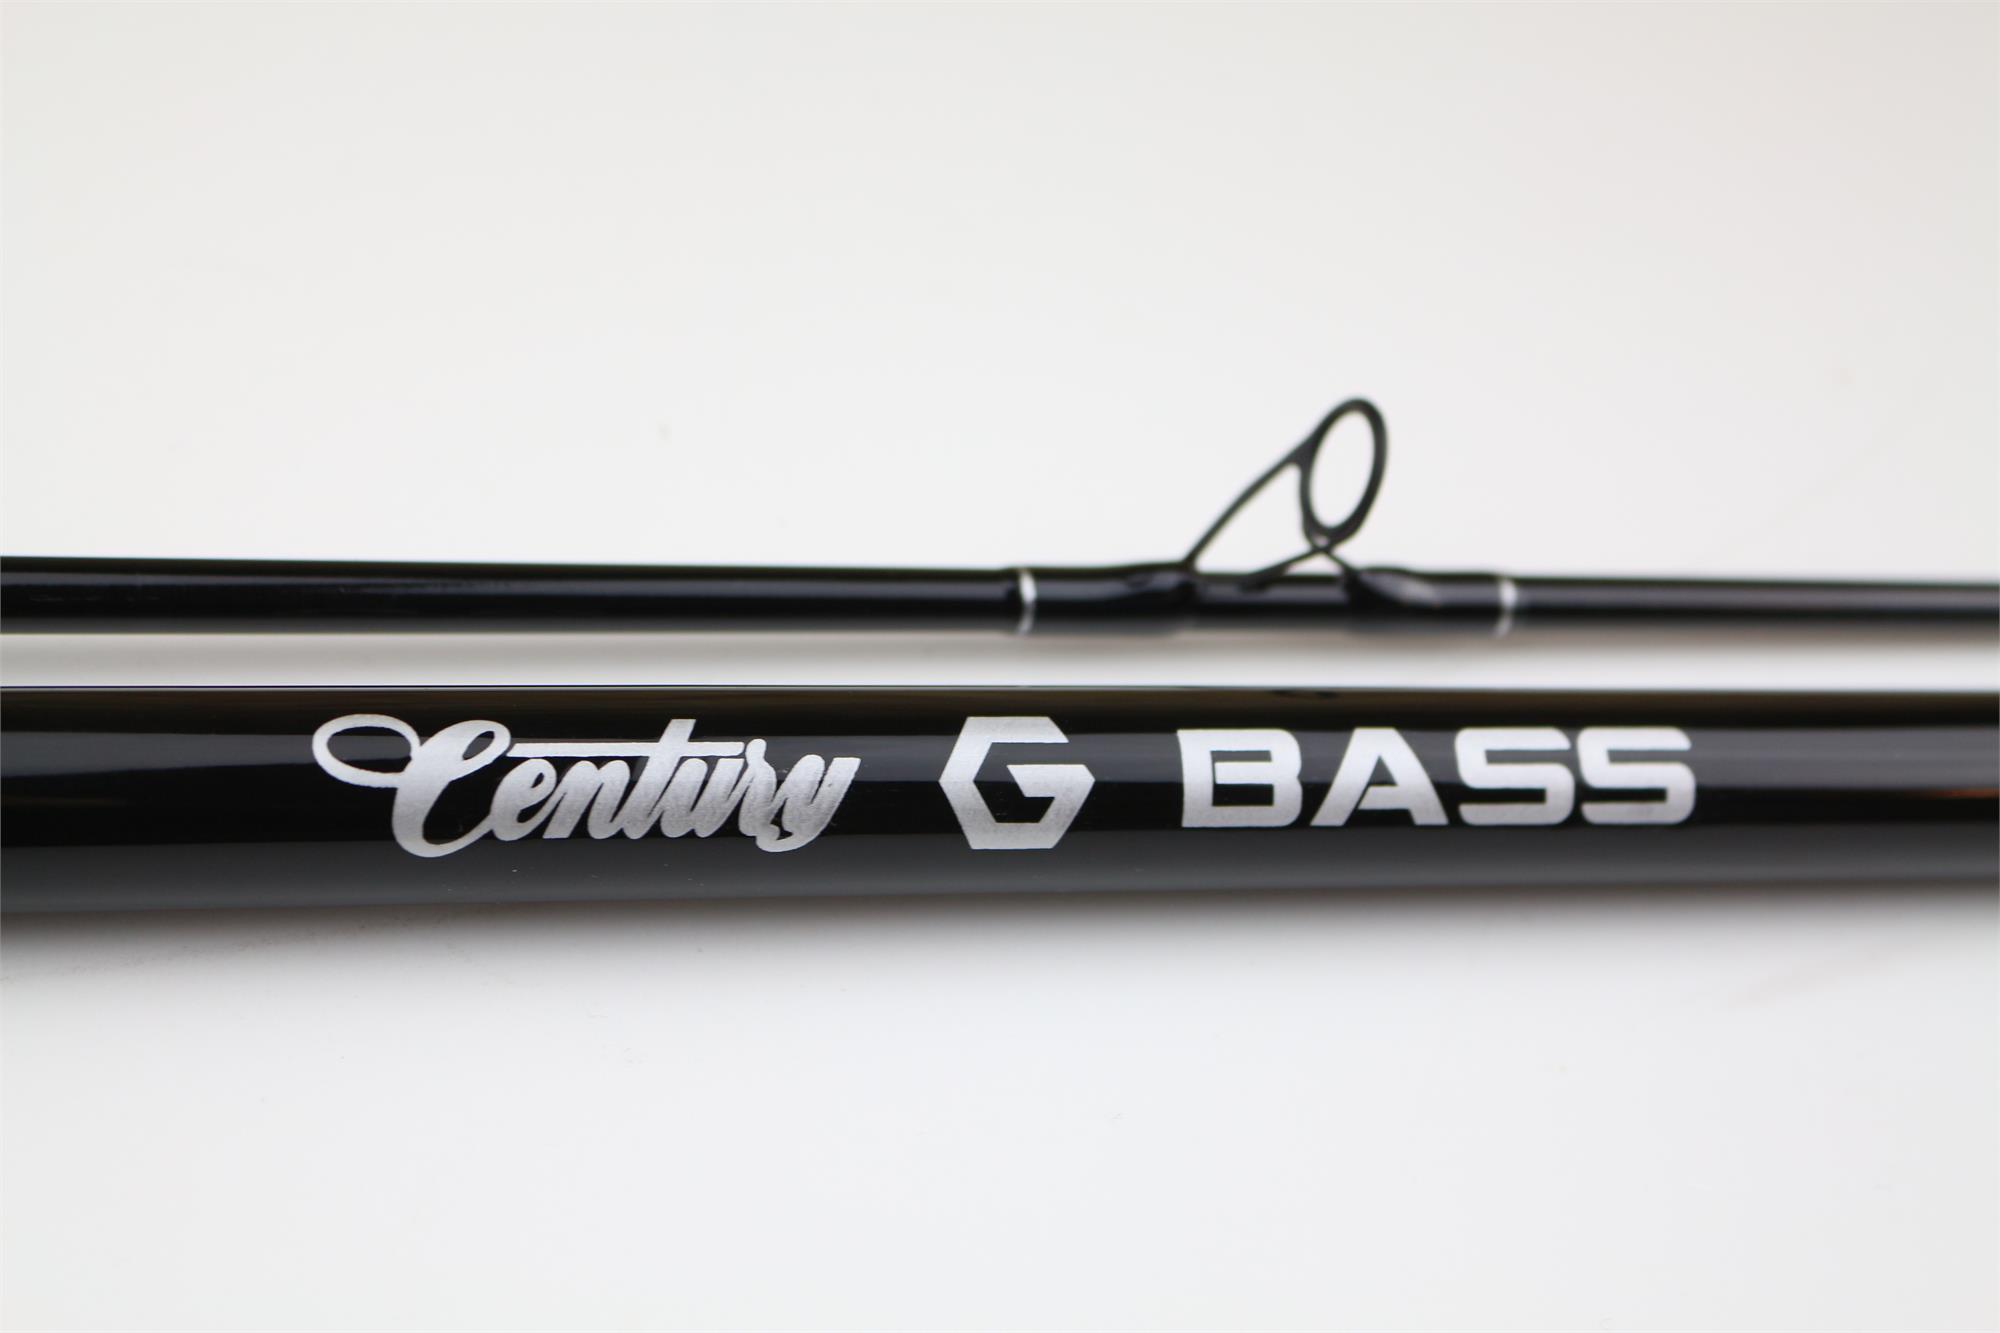 Century G Bass Rod 11' 6 Custom Built By Chris Dance